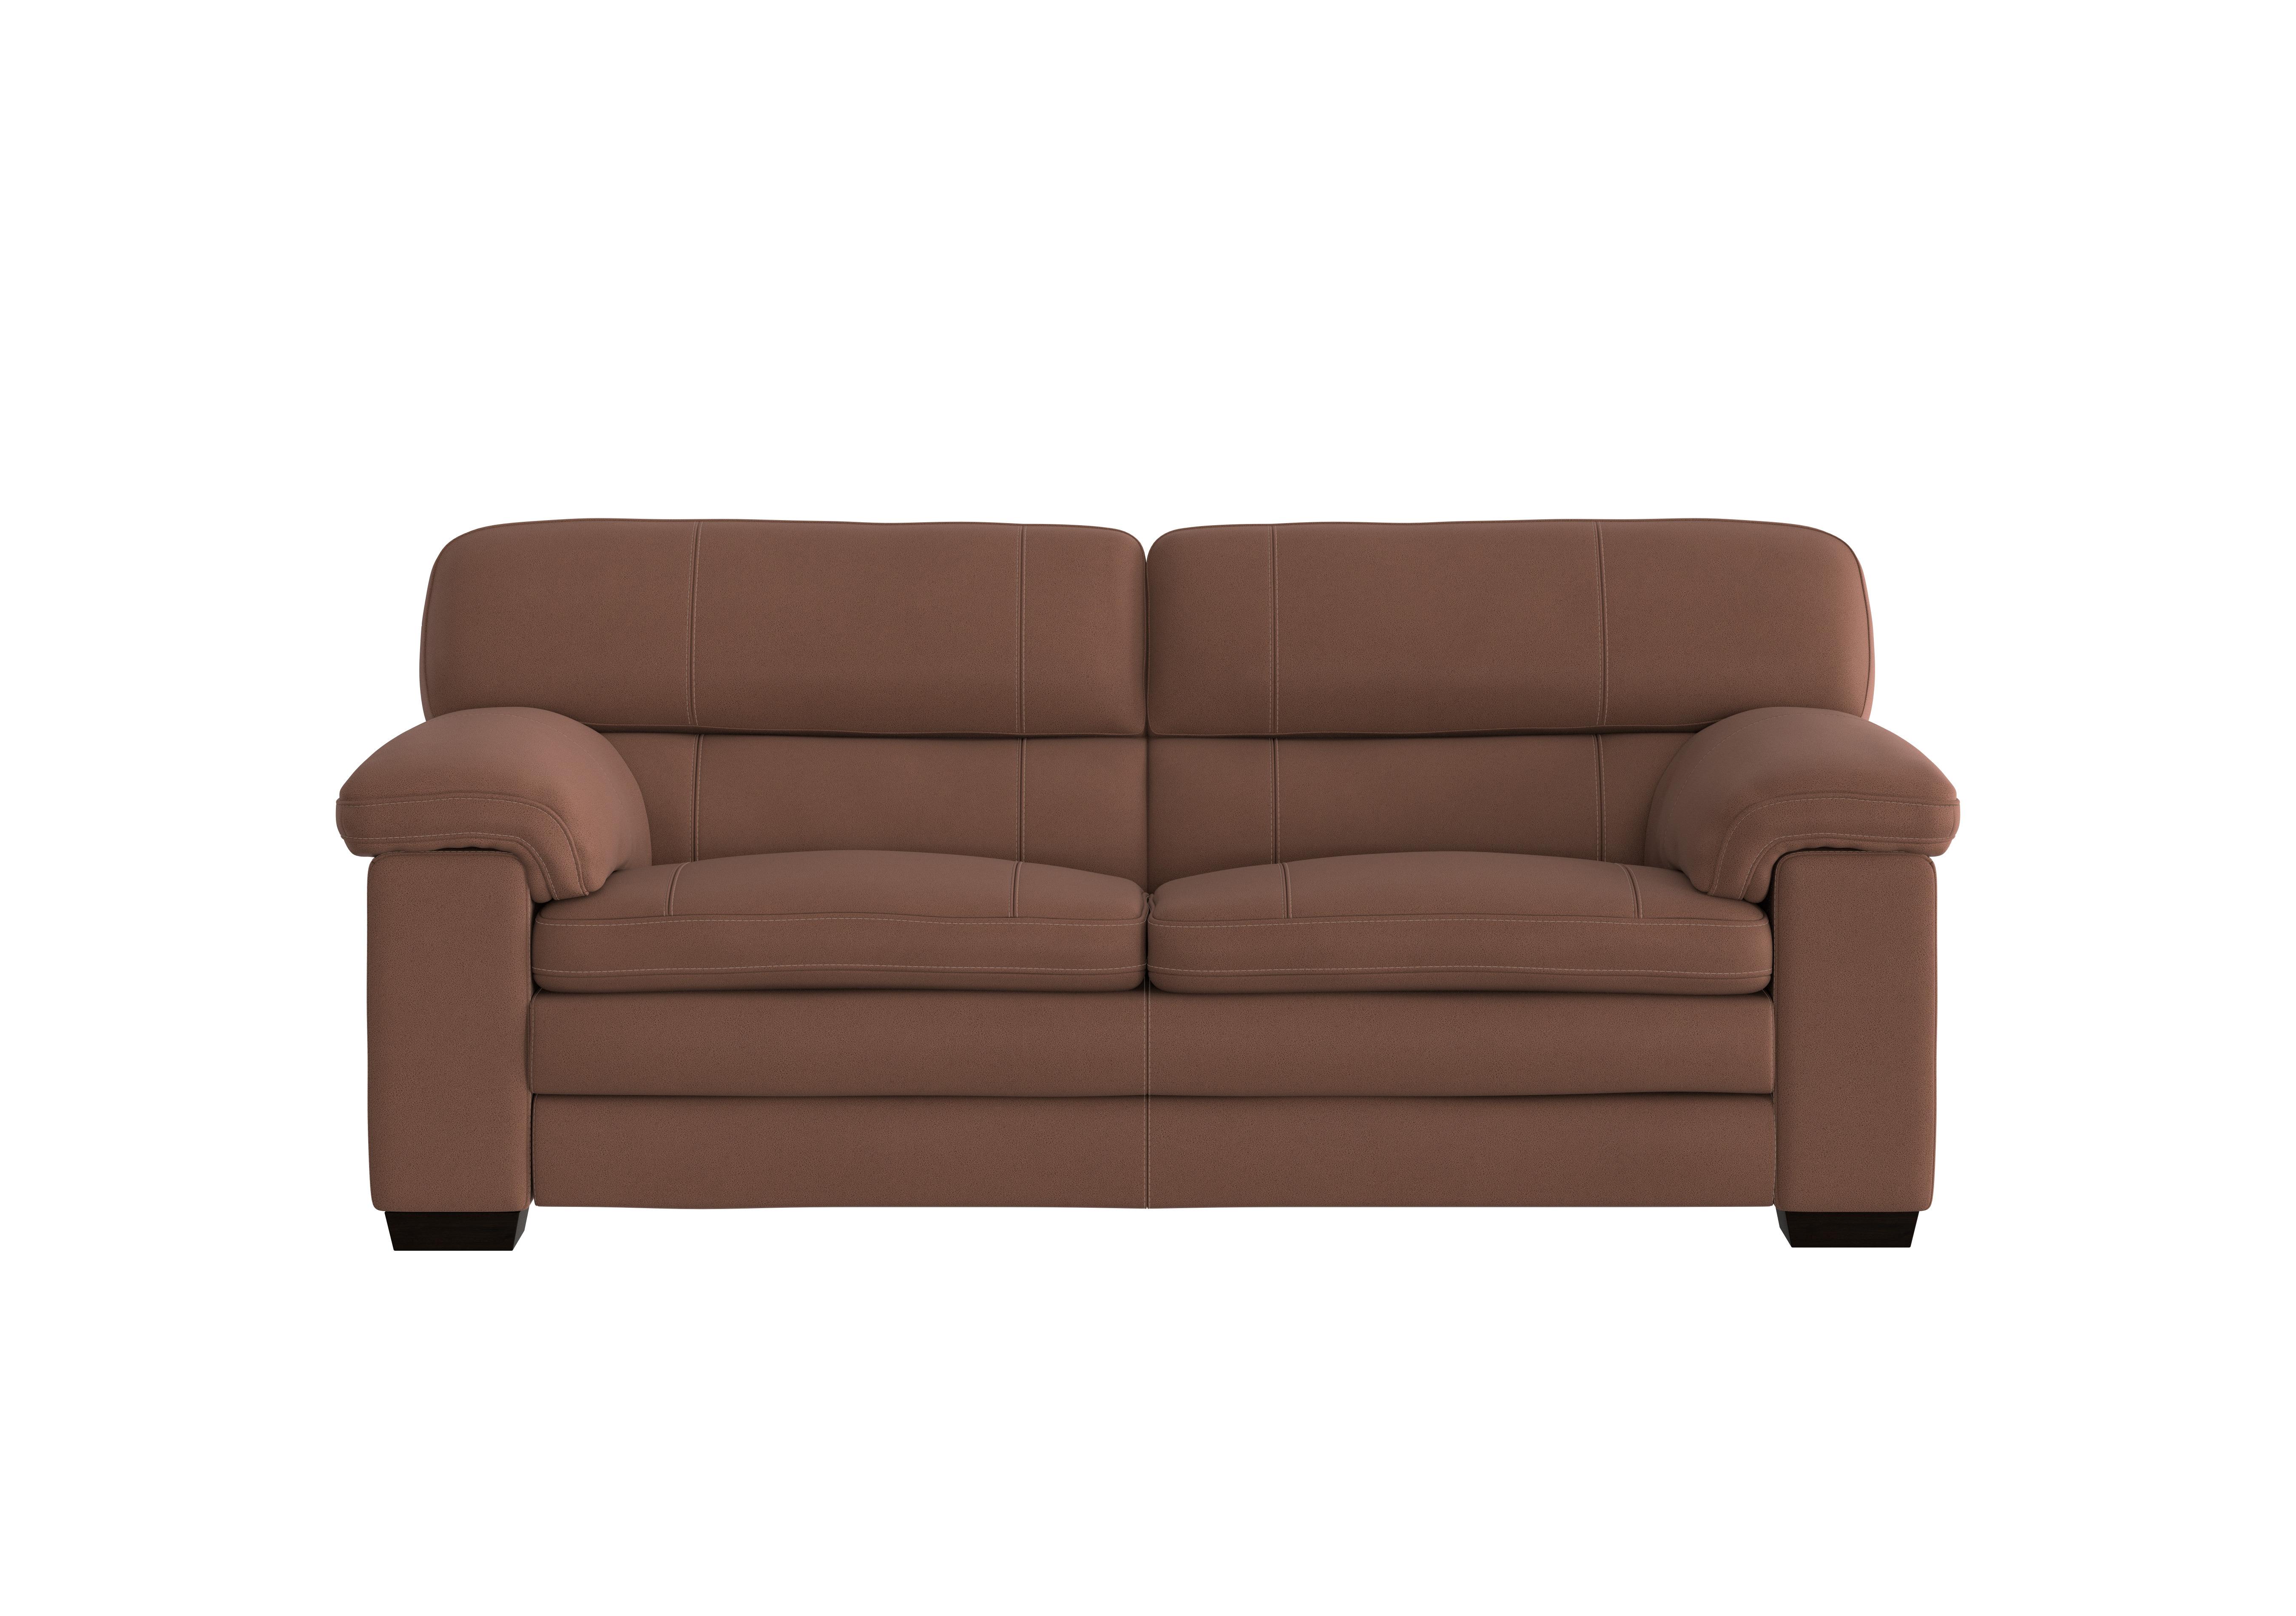 Cozee Fabric 2.5 Seater Sofa in Bfa-Blj-R05 Hazelnut on Furniture Village